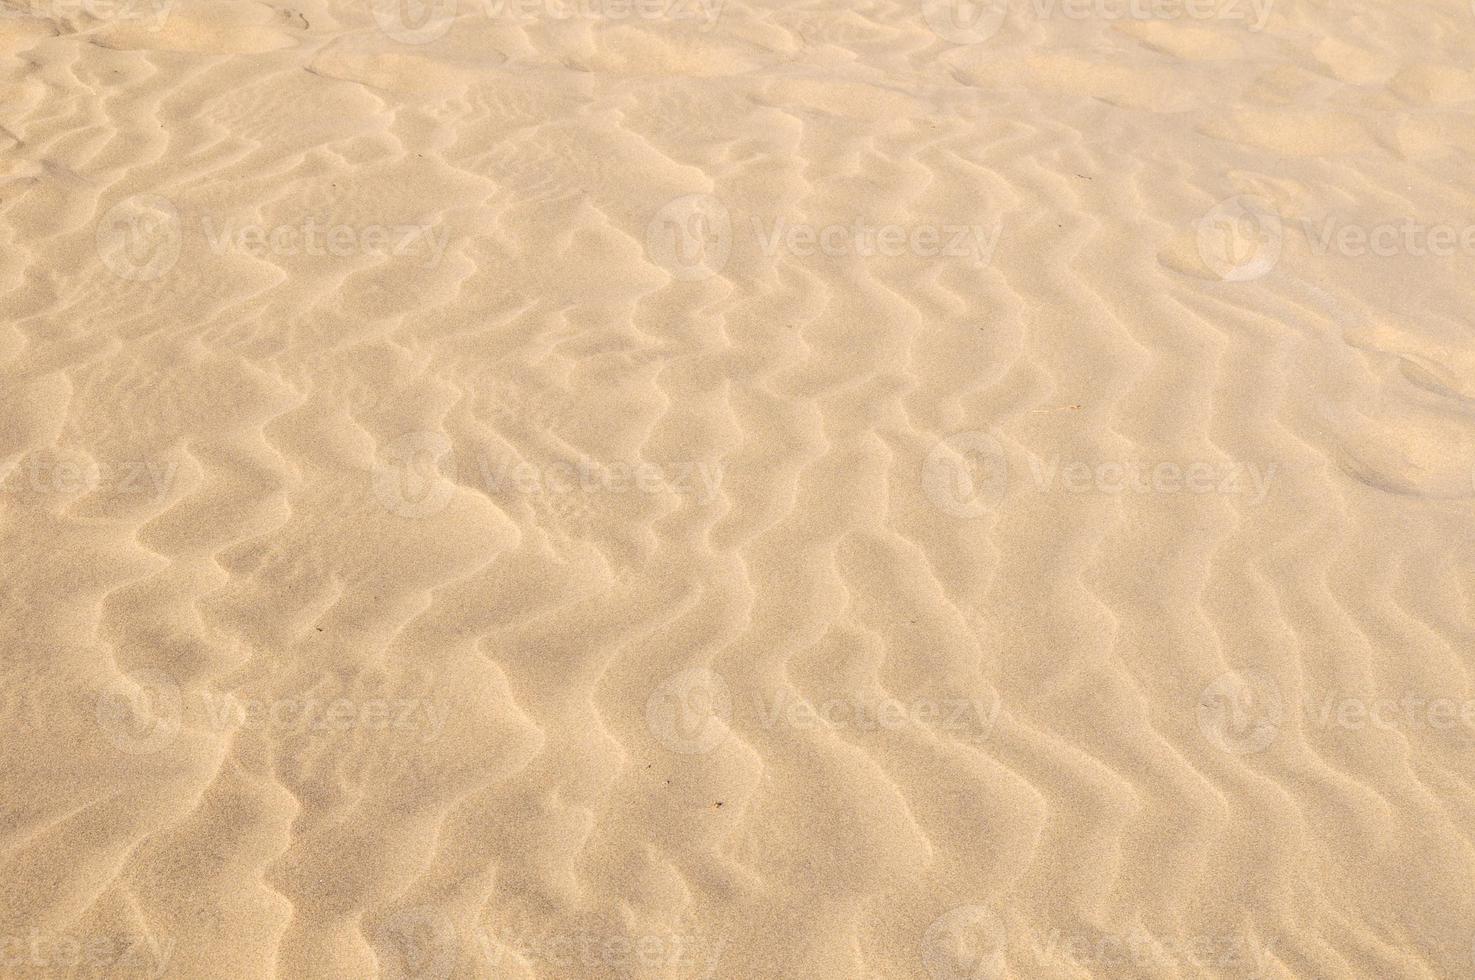 golven in de zand foto